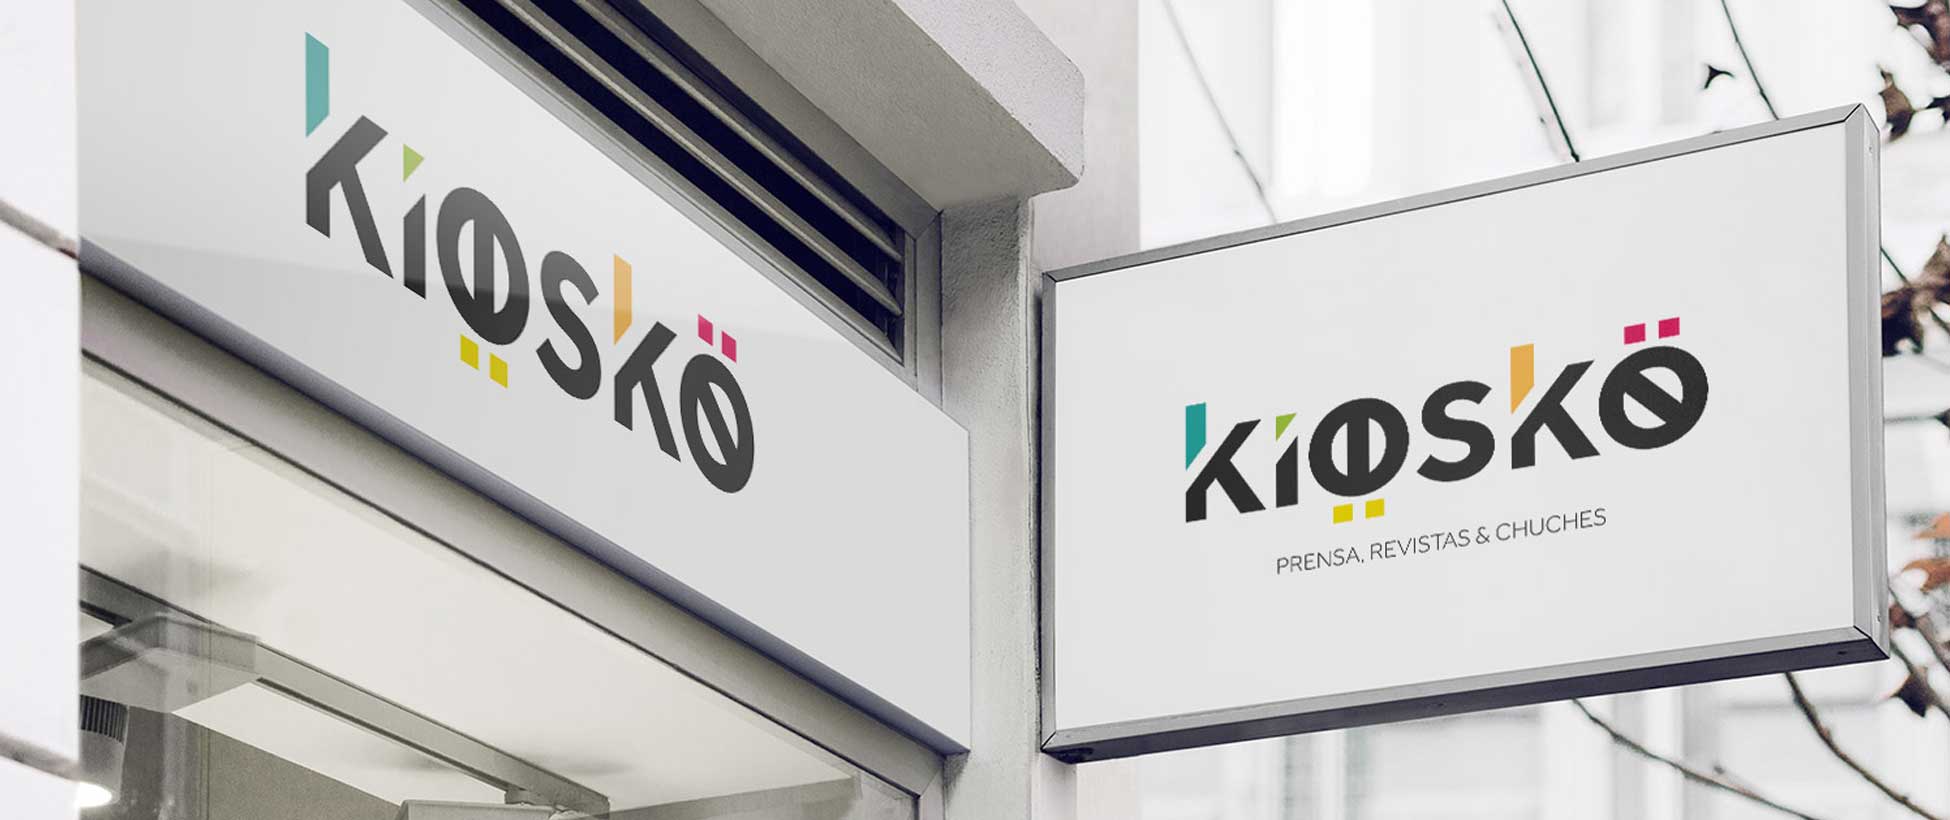 naiming, identidad visual e imagen de marca para Kiosko